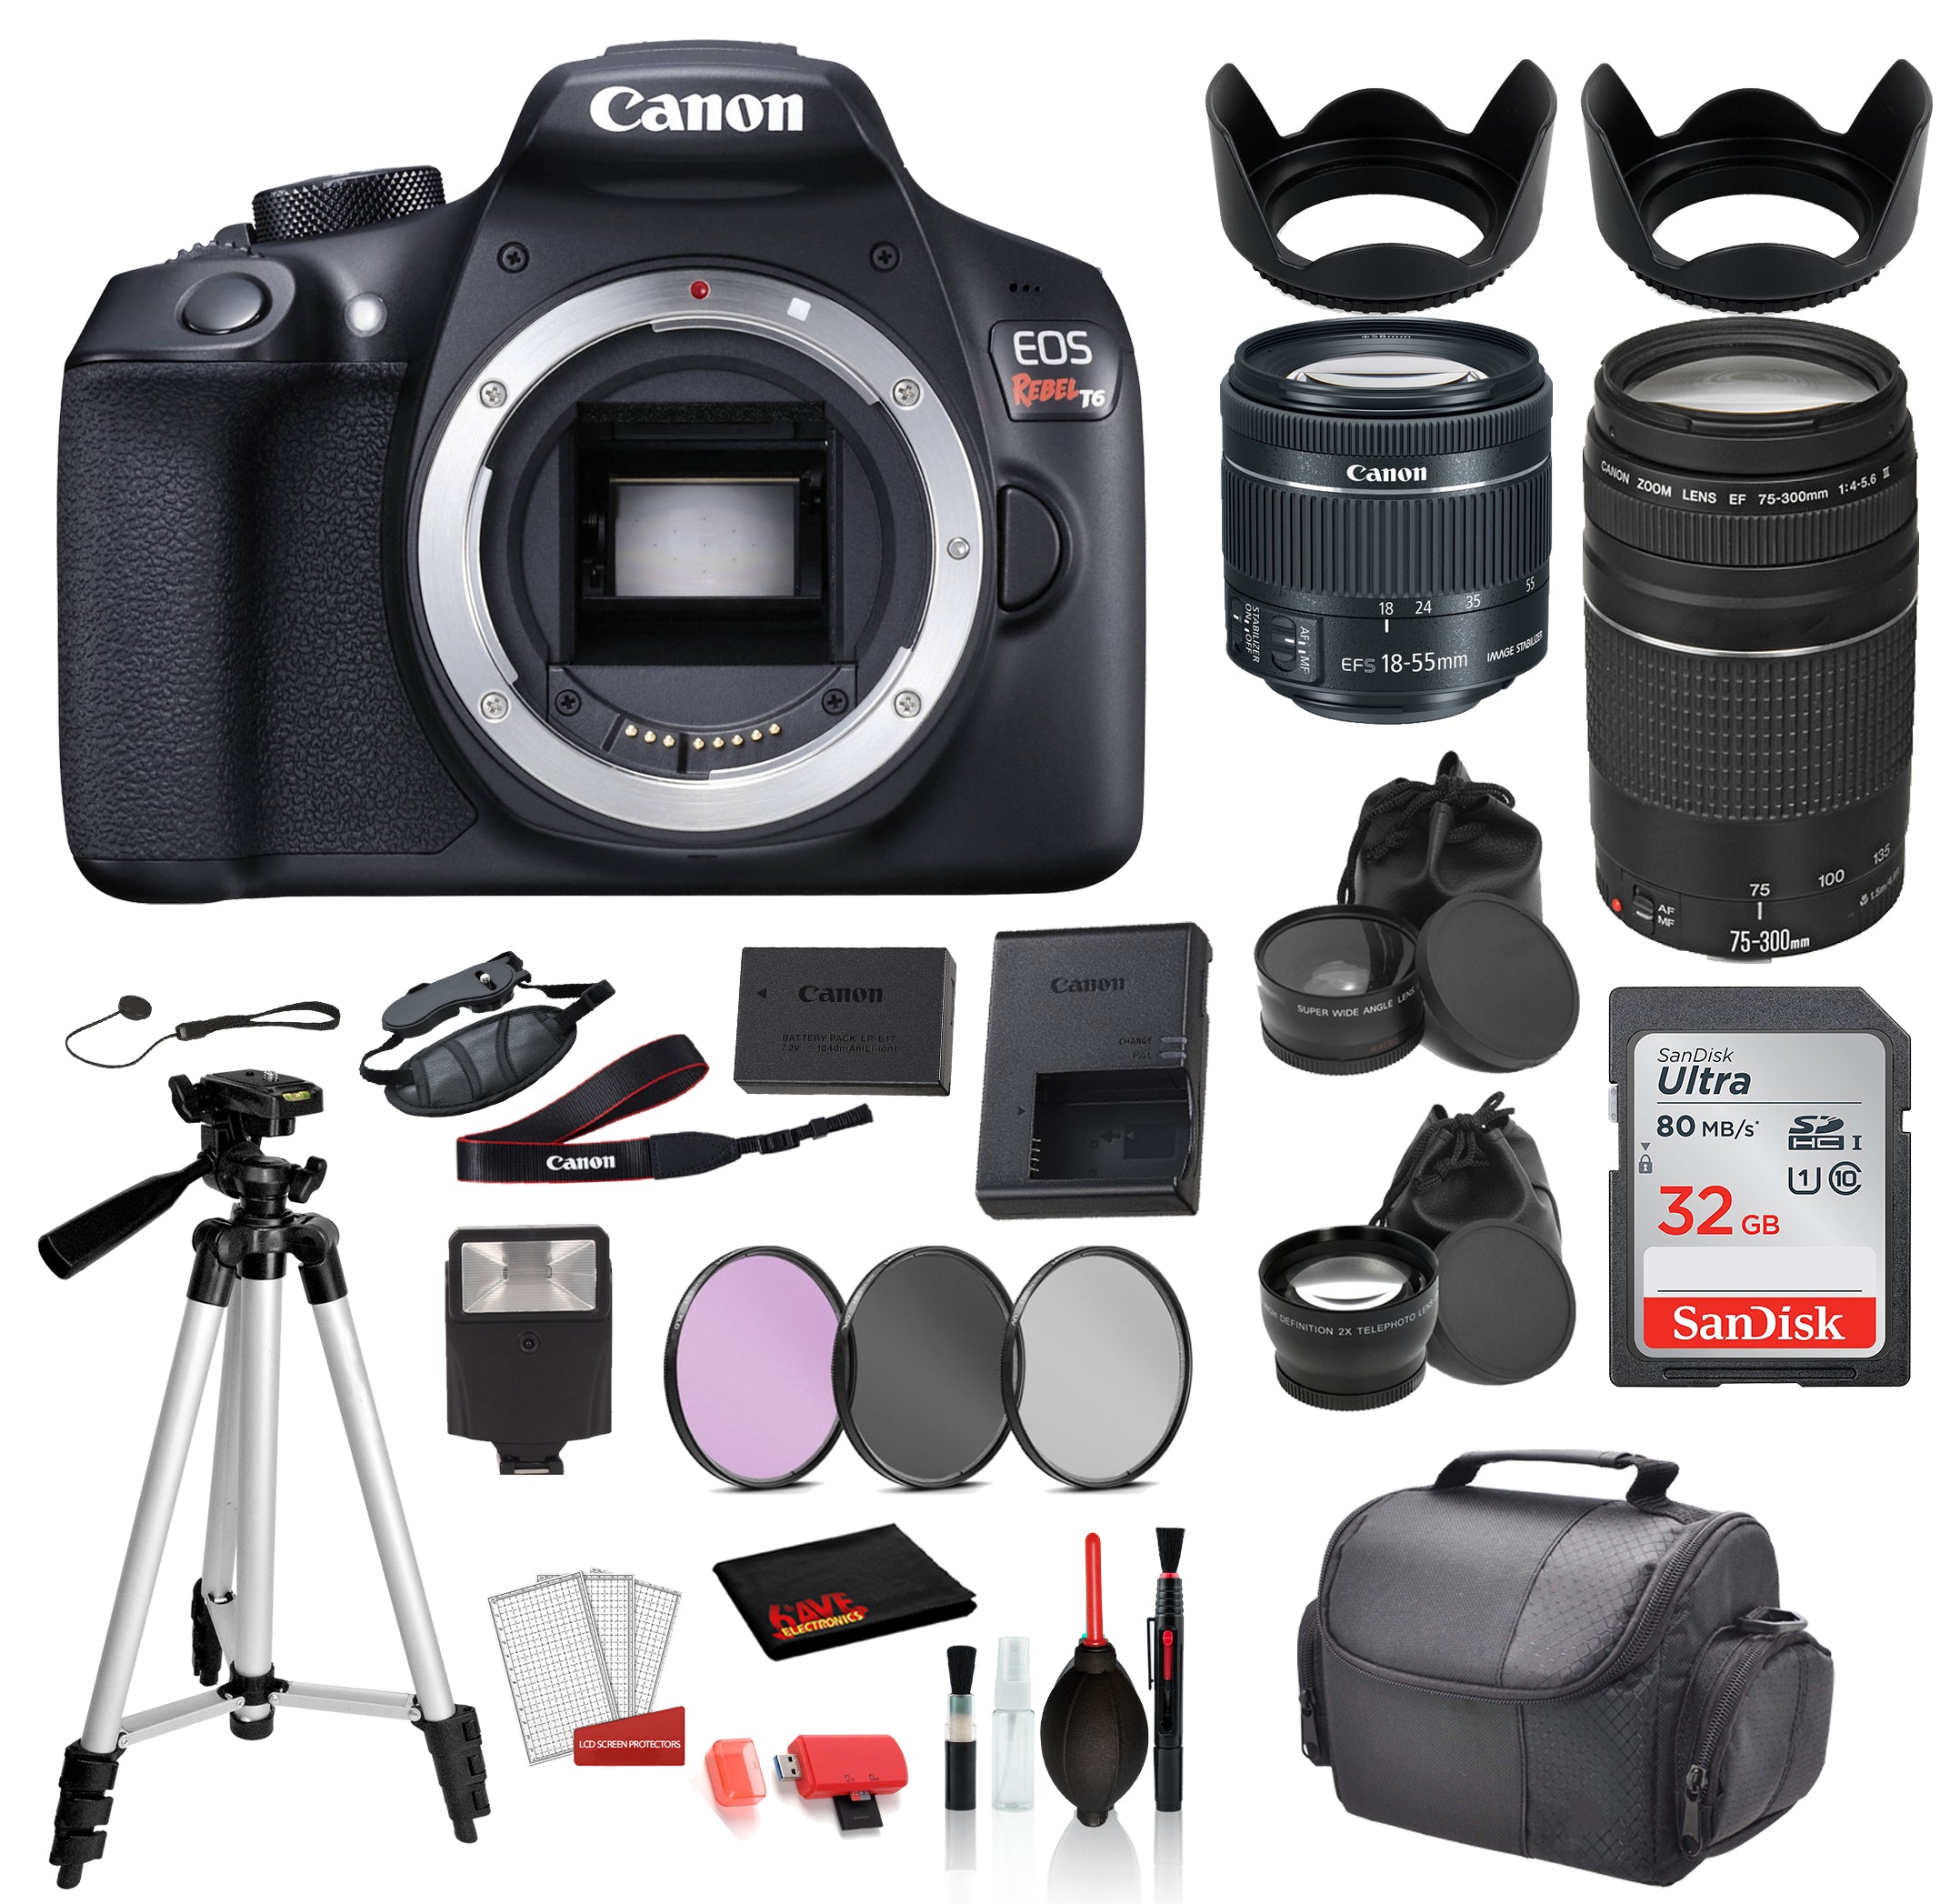 Canon EOS Rebel T6 Digital SLR Camera WITH 18-55mm Lens +EF 75-300mm Lens   SanDisk 32gb SD Card + 3PC Filter Kit + MORE